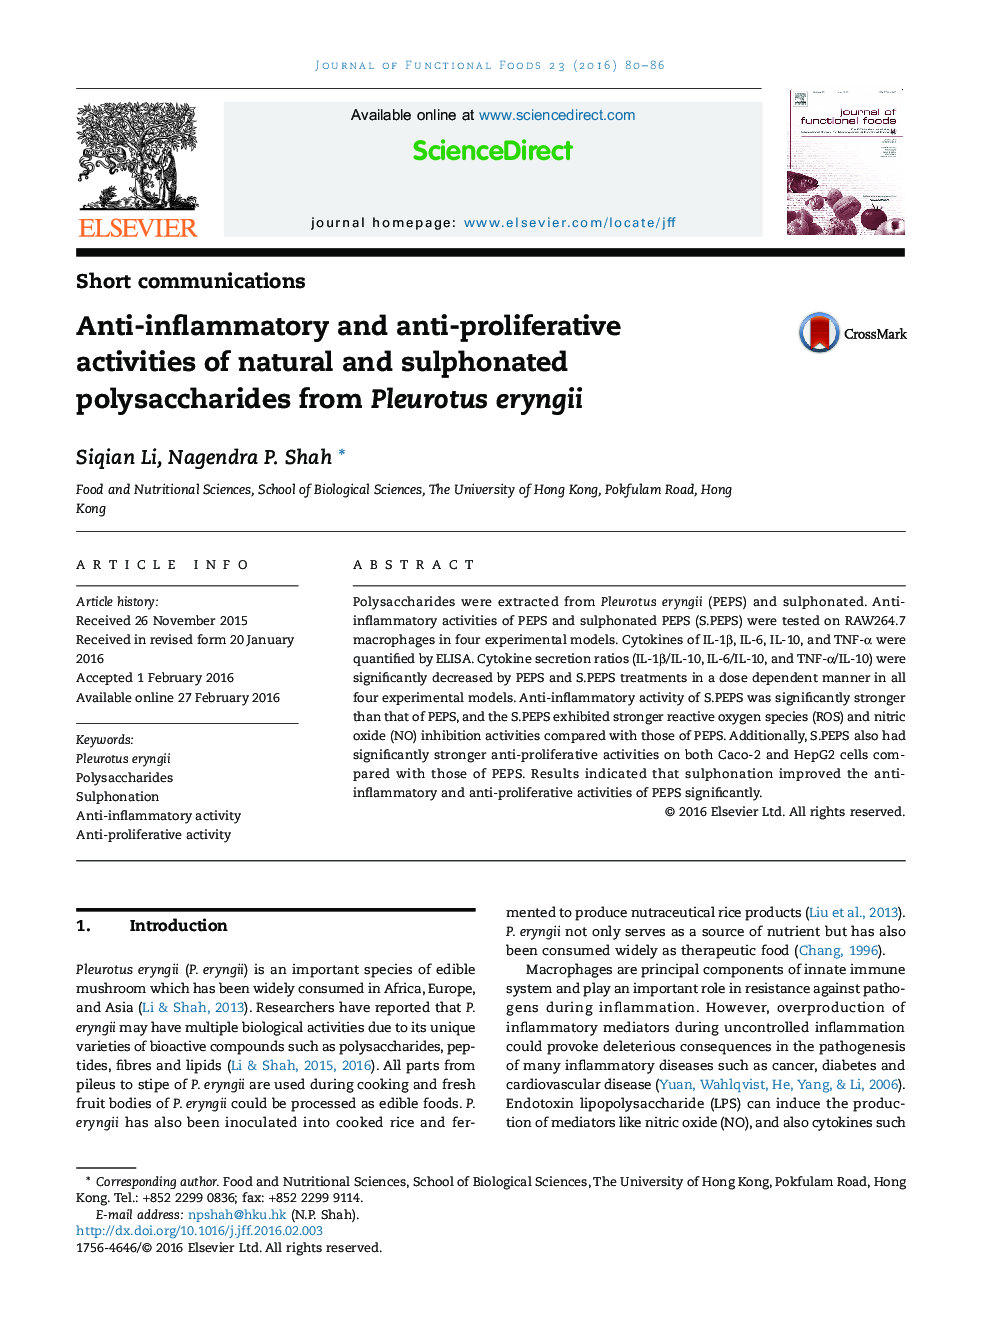 Anti-inflammatory and anti-proliferative activities of natural and sulphonated polysaccharides from Pleurotus eryngii